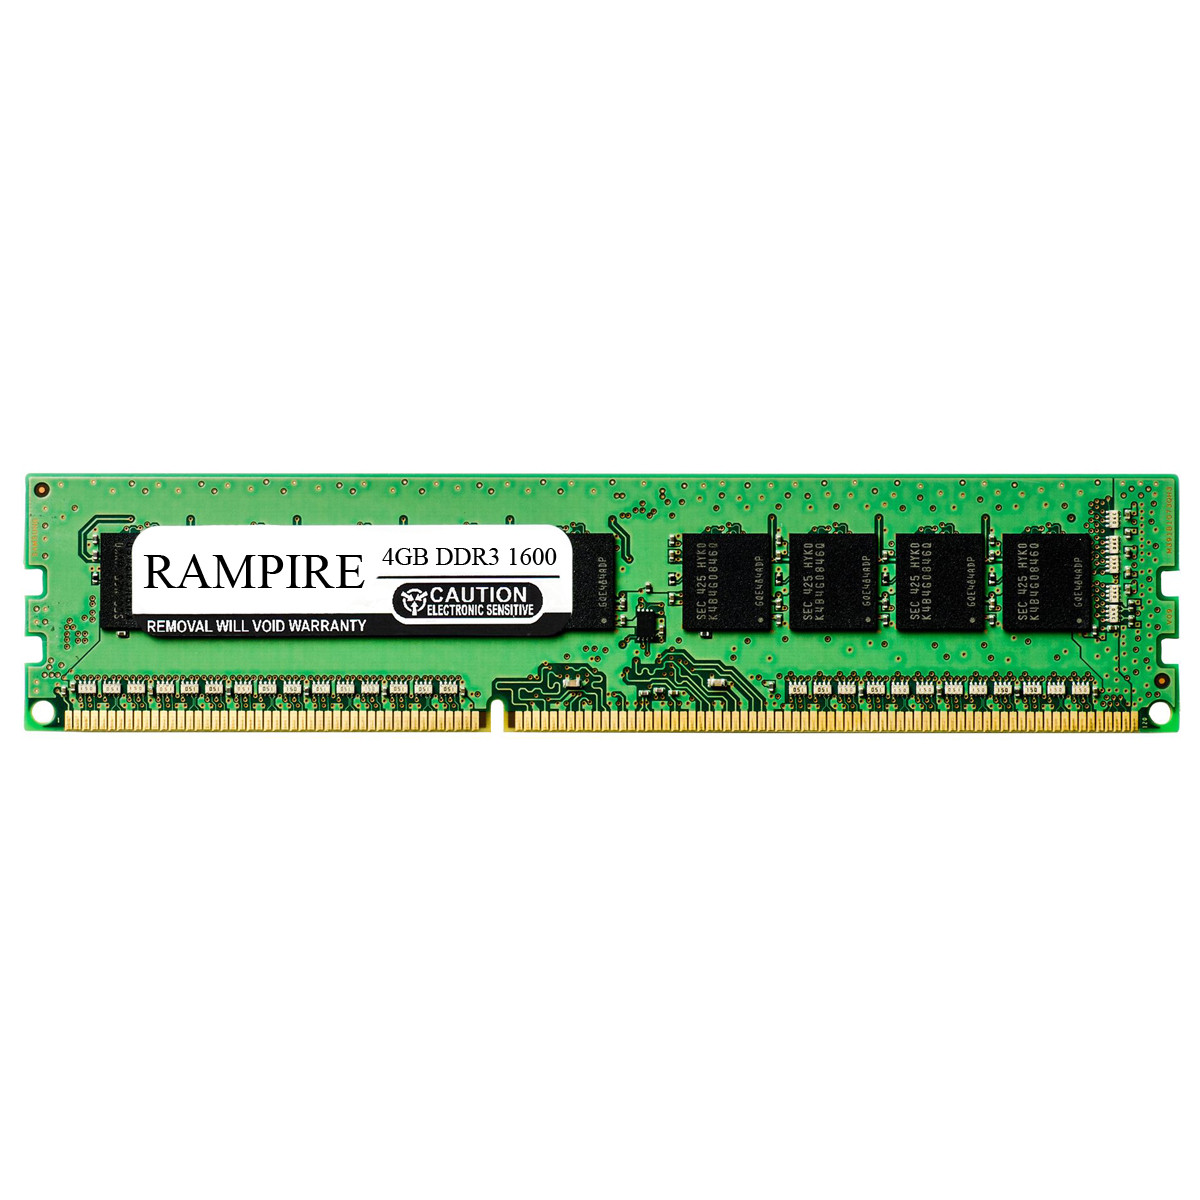 RAMPIRE 4GB DDR3 1600 (PC3 12800) 240-Pin DDR3 SDRAM 1.5V 1Rx8 Non-ECC UDIMM Memory for Desktop PC